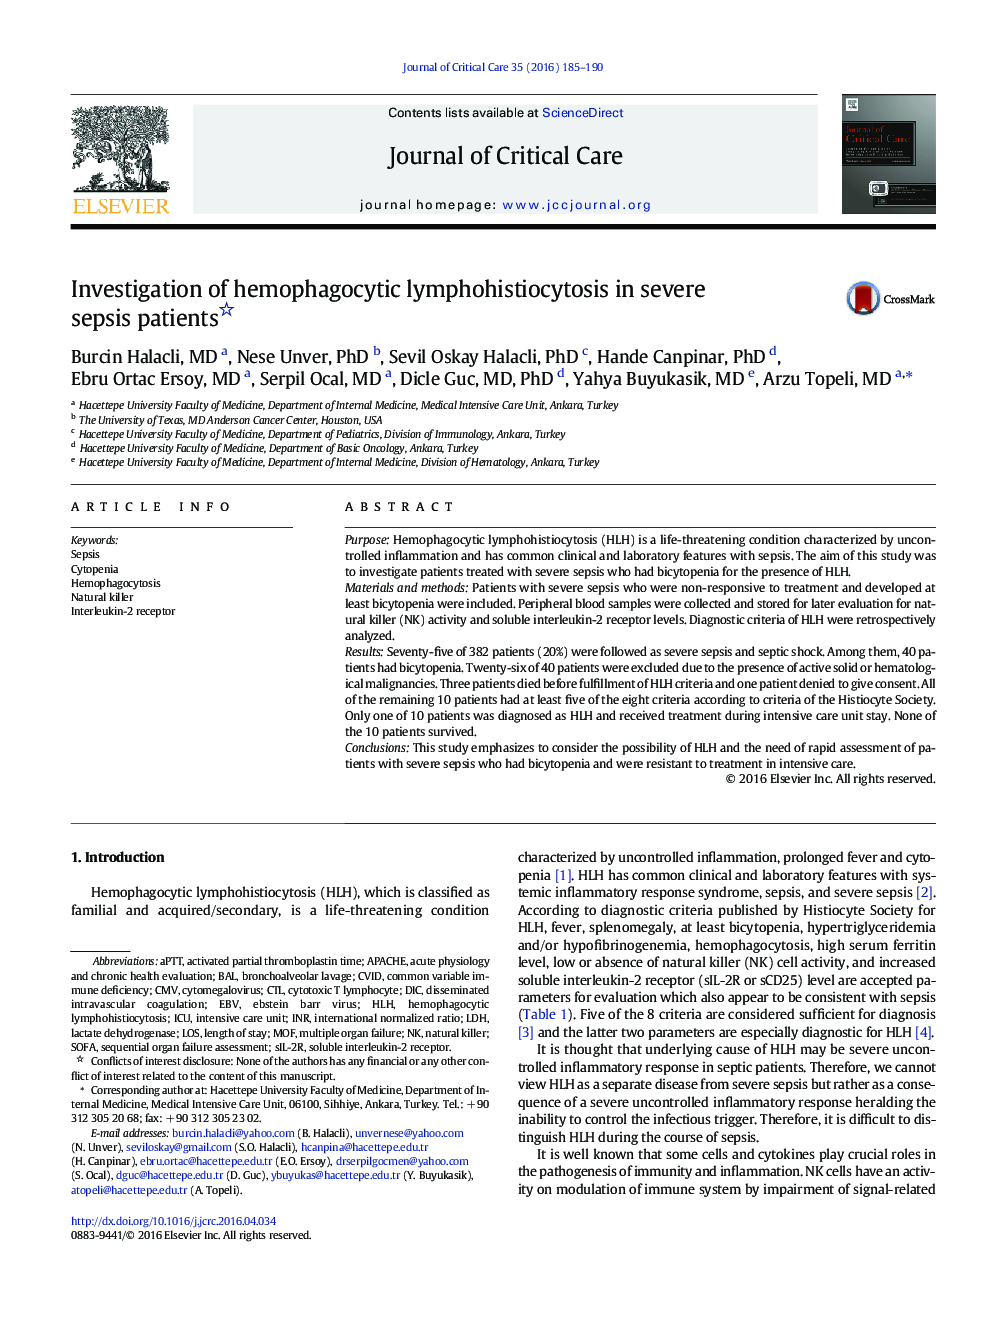 Investigation of hemophagocytic lymphohistiocytosis in severe sepsis patients 